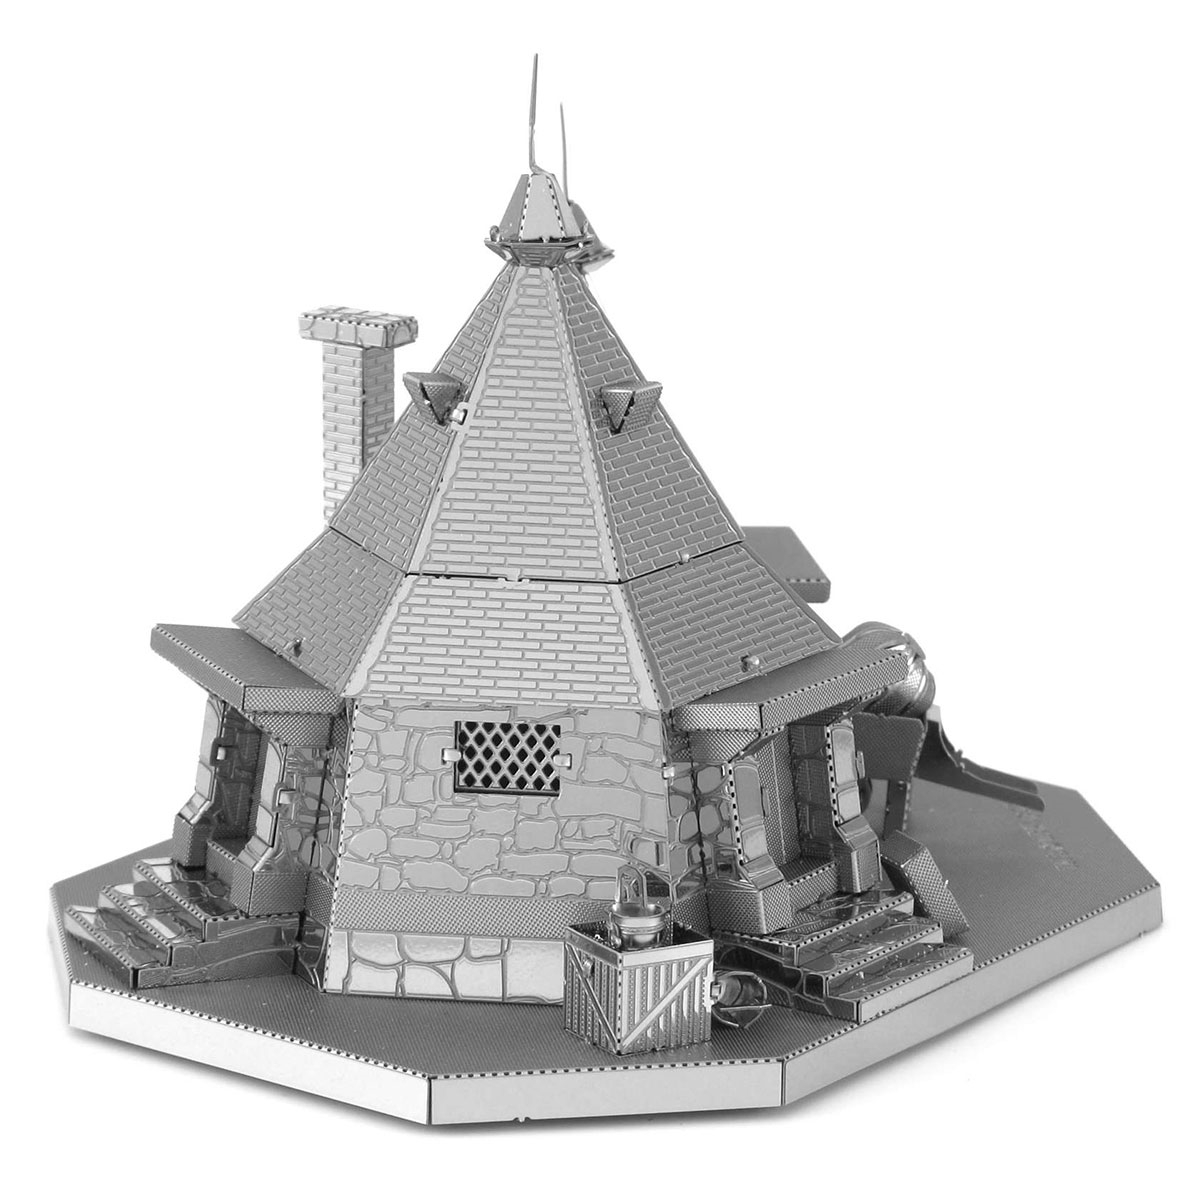 Fascinations Metal Earth Harry Potter Hagrid's Hut 3D Model Kit MMS441